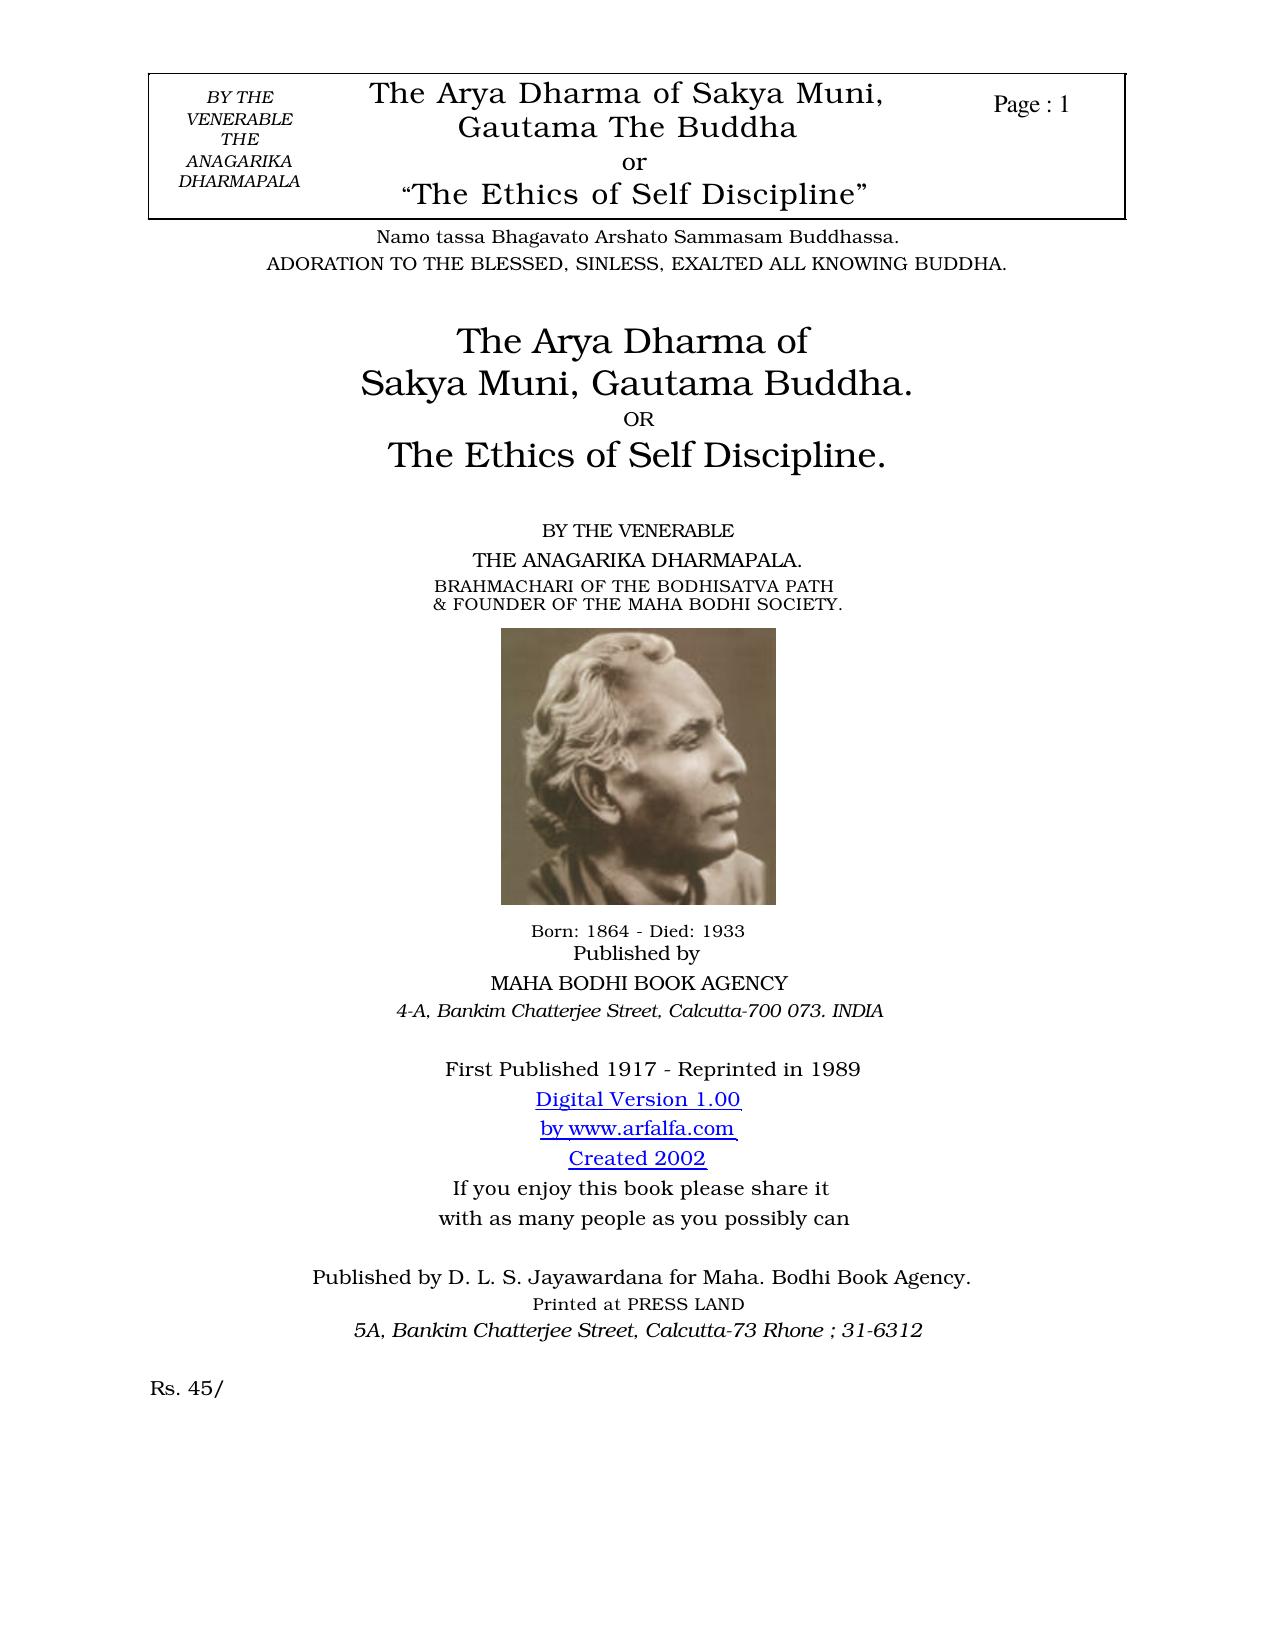 The Arya Dharma of Sakya Muni, Gautama Buddha, or The Ethics of Self Discipline